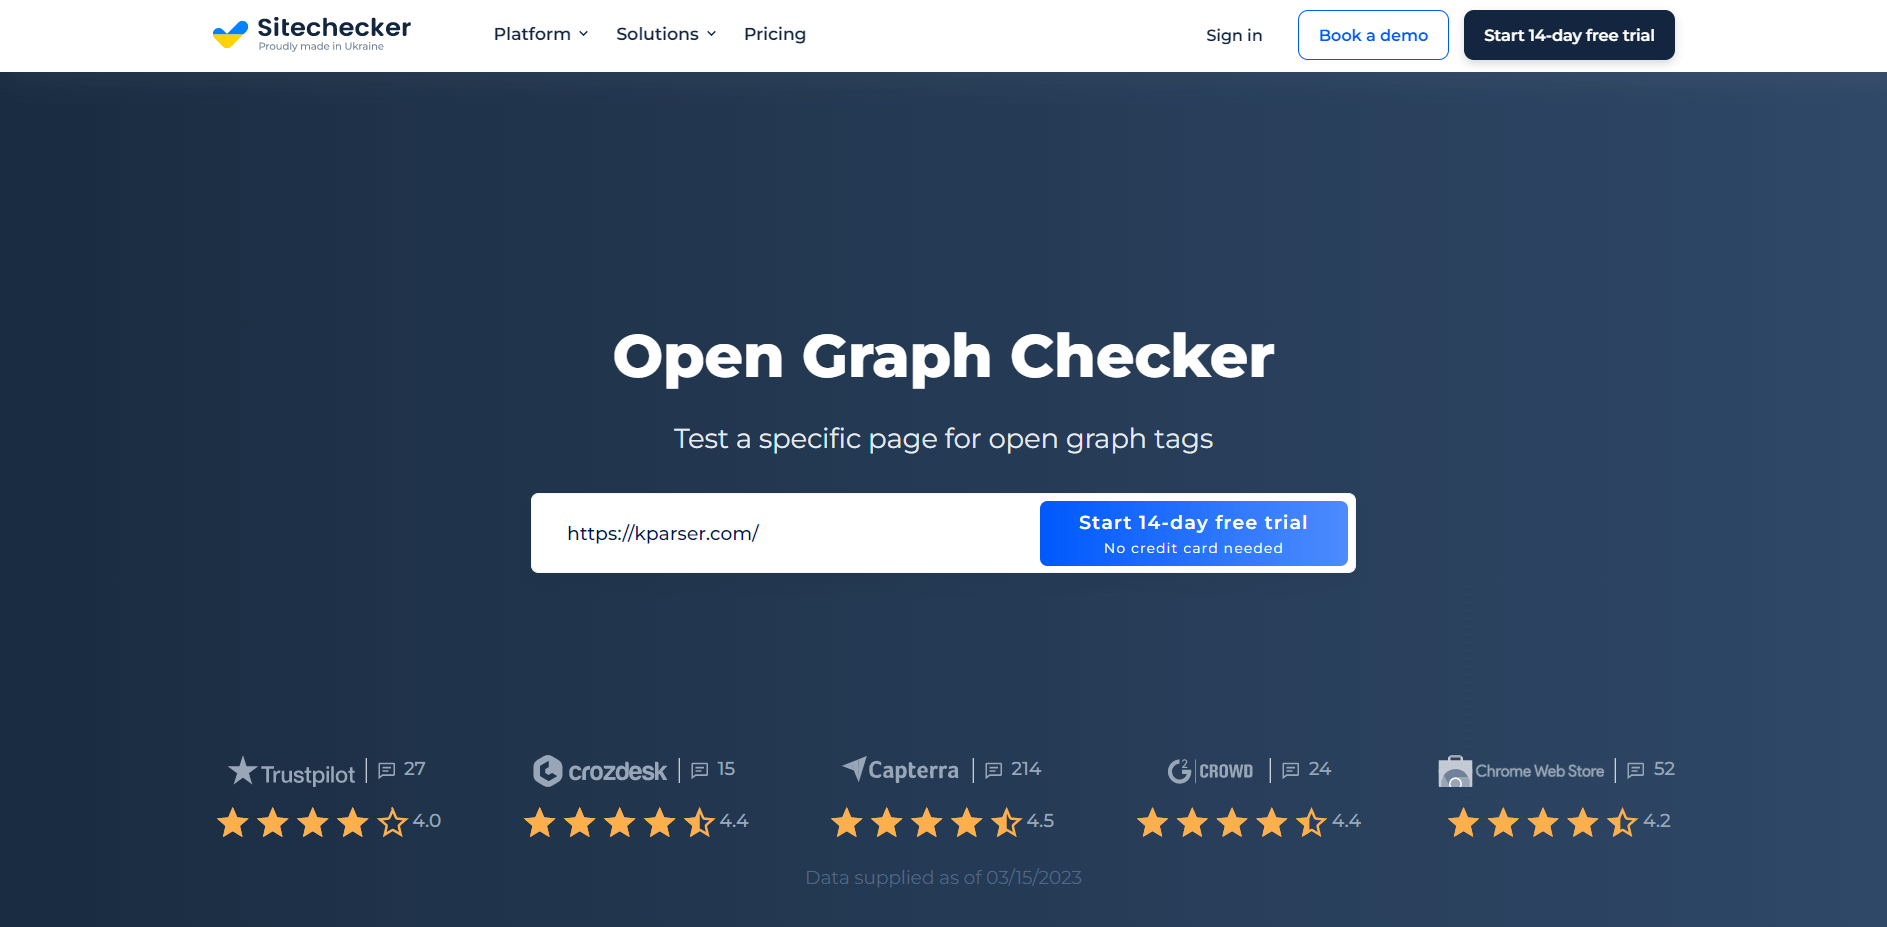 open graph checker free trial start